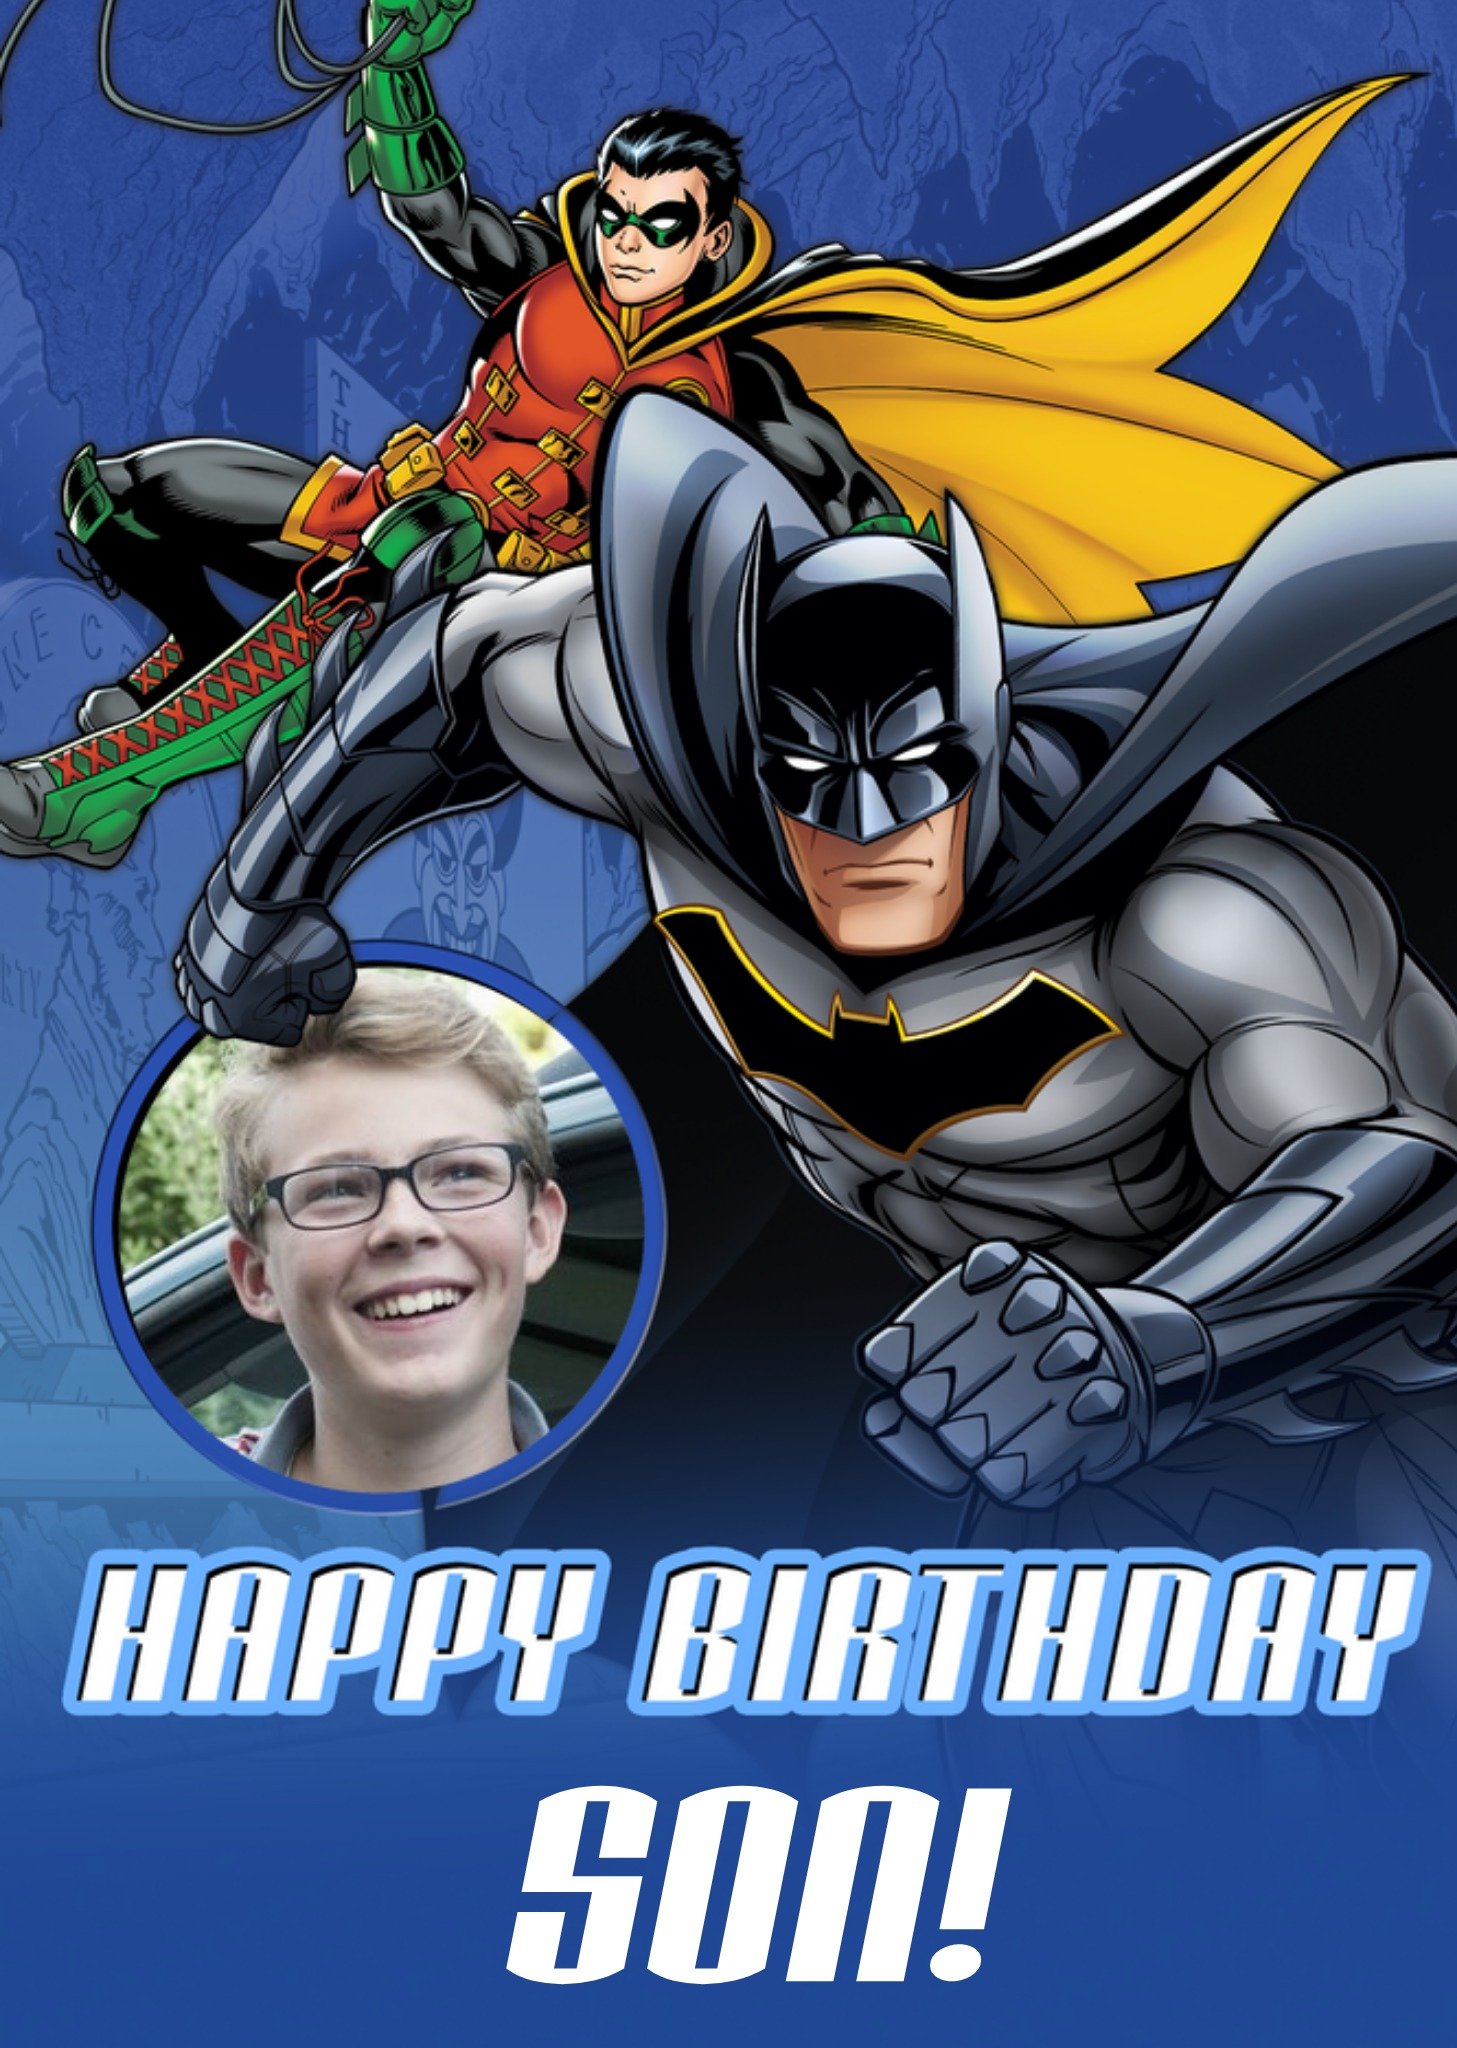 Illustrated Batman And Robin Photo Upload Son Birthday Card, Large